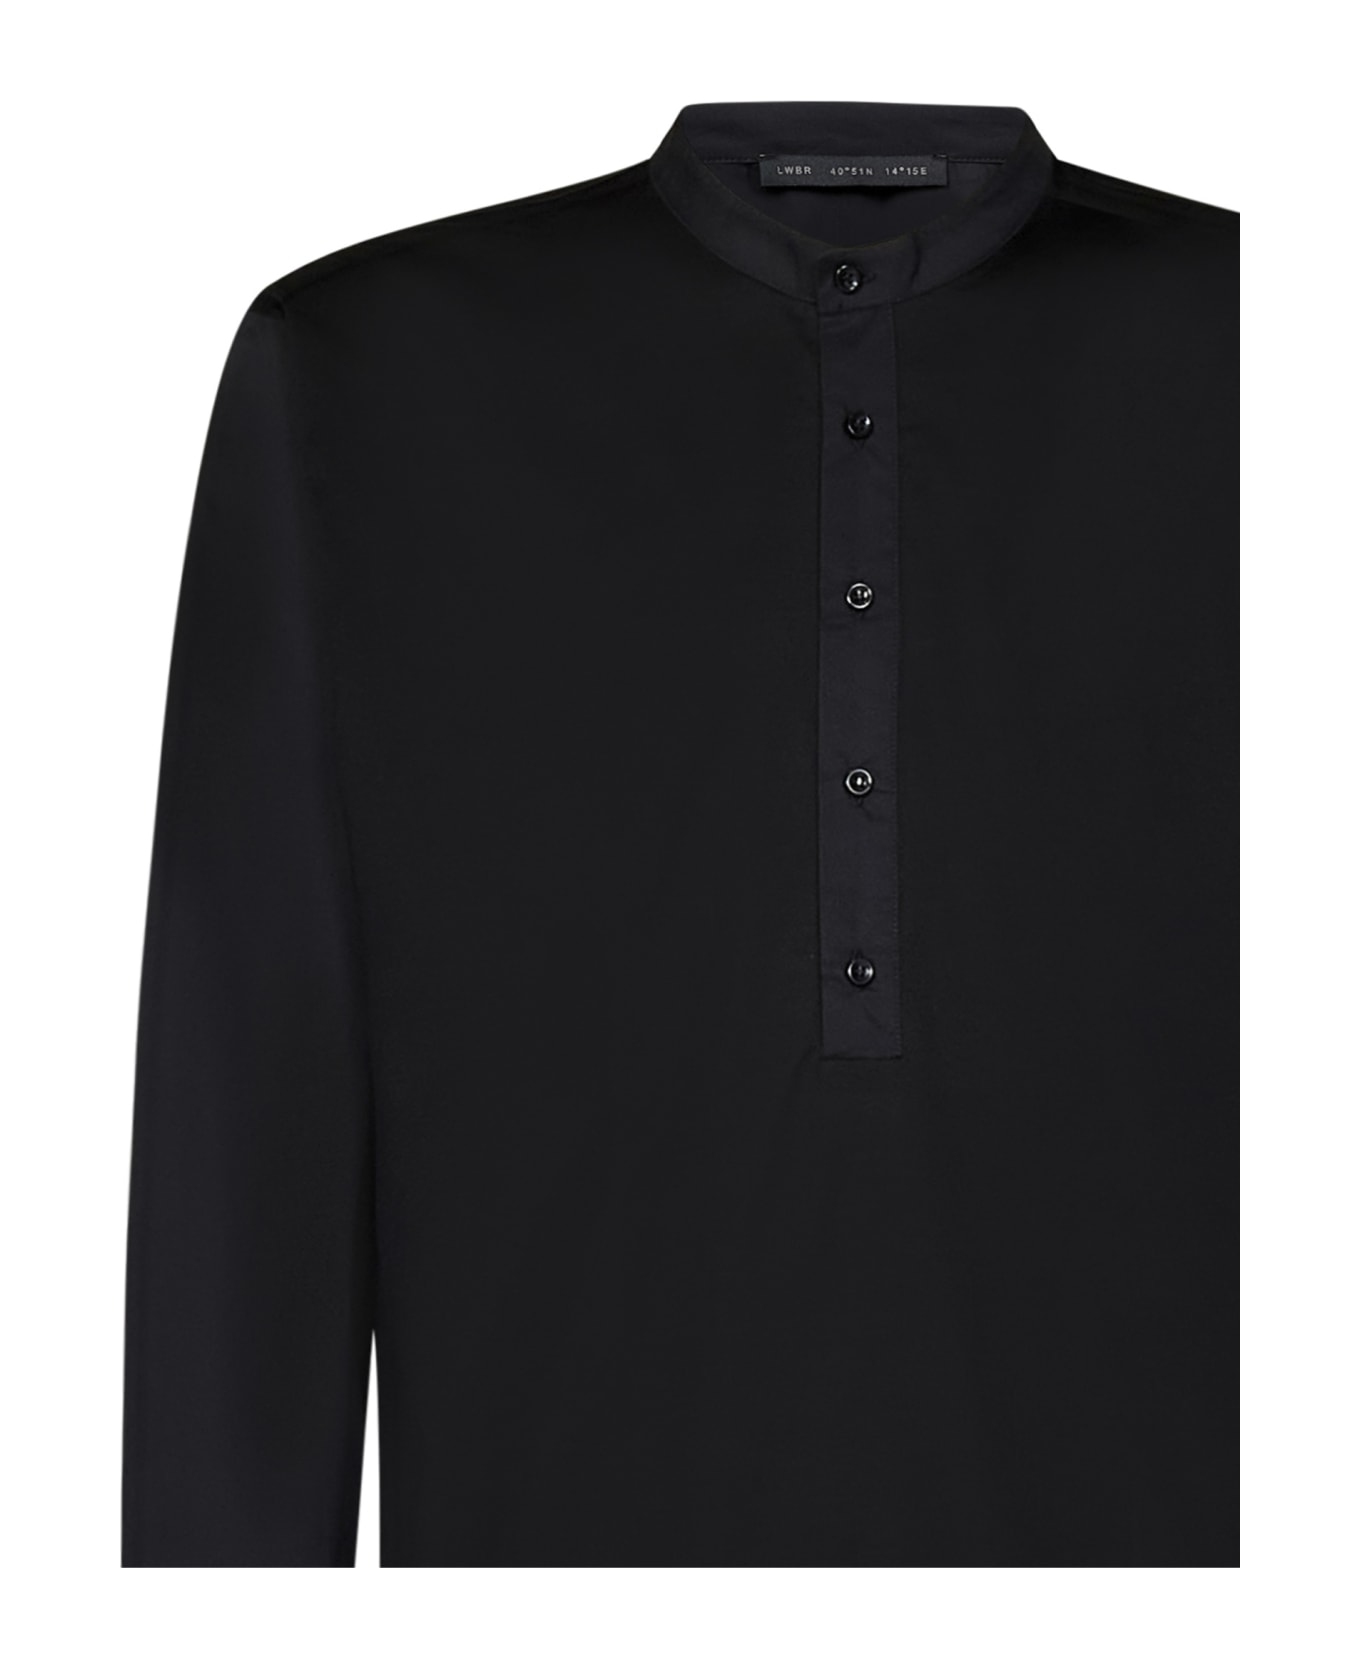 Low Brand T-shirt - Black ポロシャツ